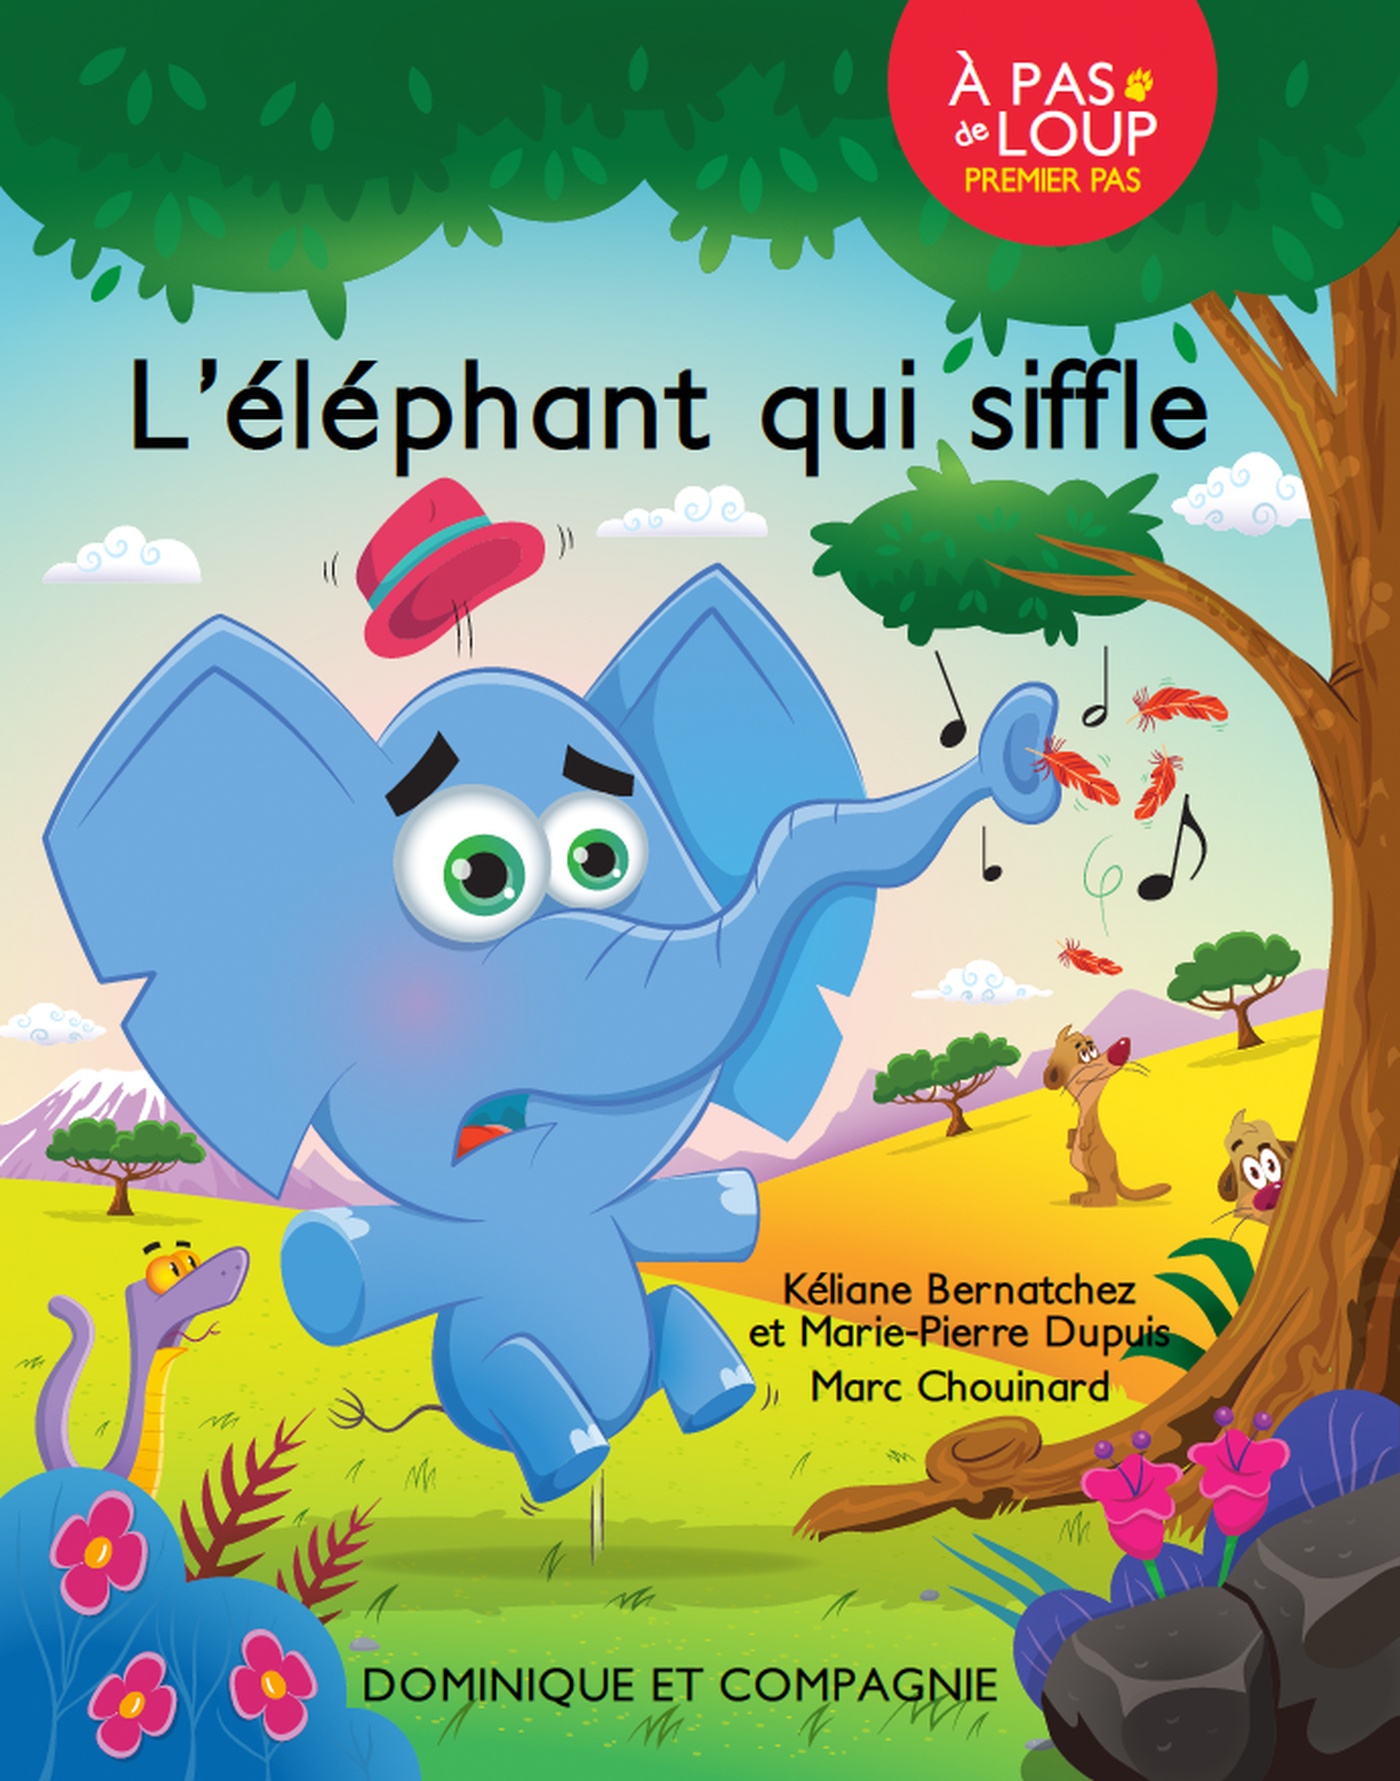 Marc Chouinard - elephant couvert